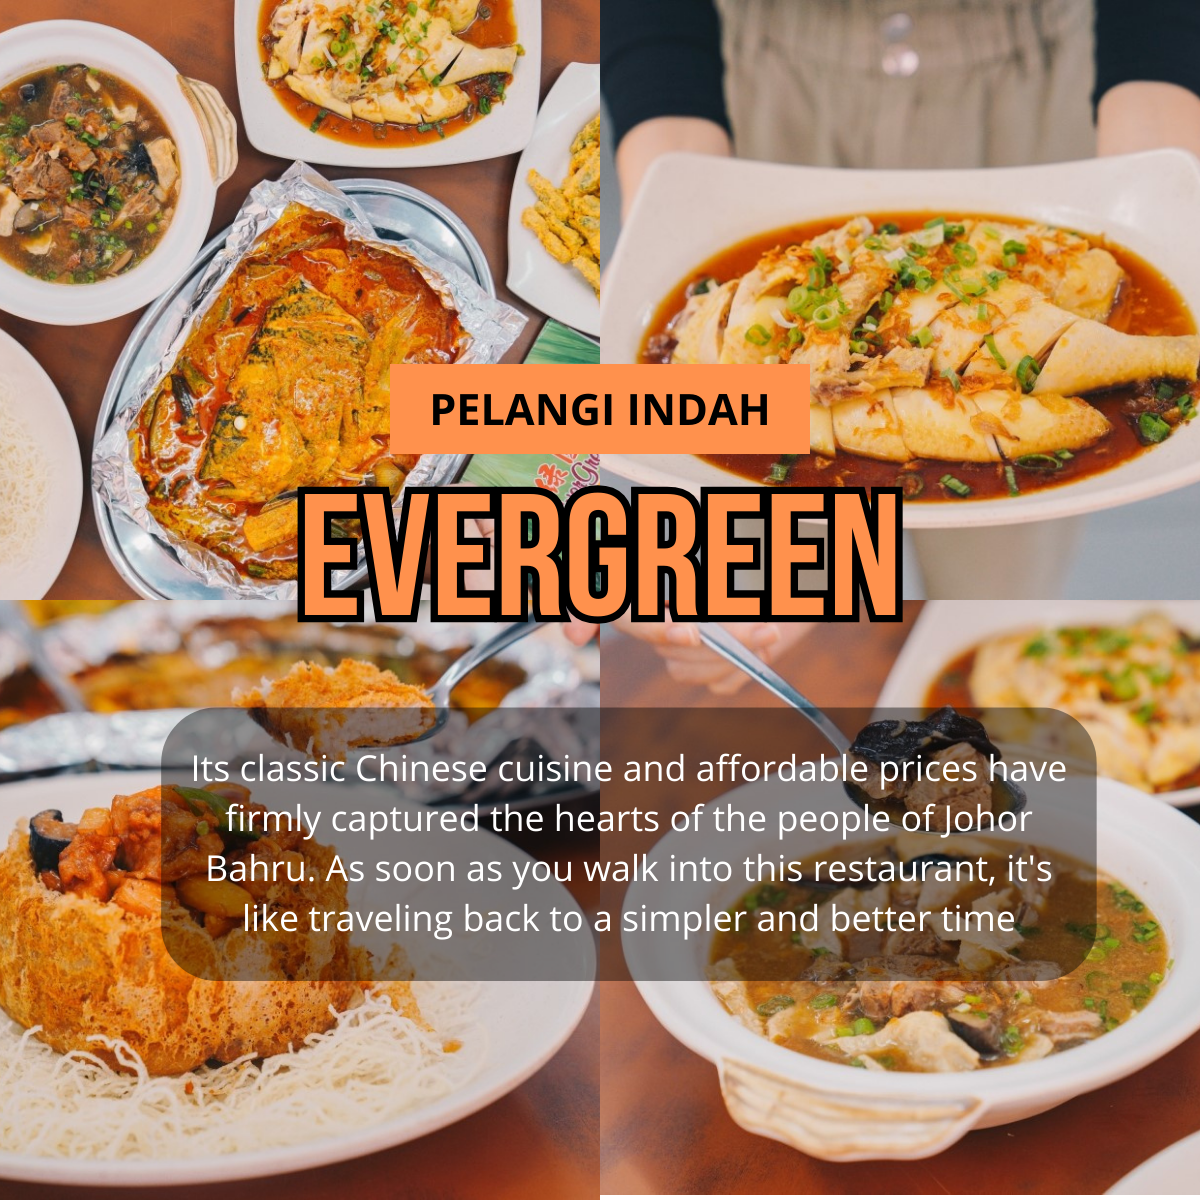 Restaurant Evergreen Johor Bahru: A Culinary Oasis of Asian Delights